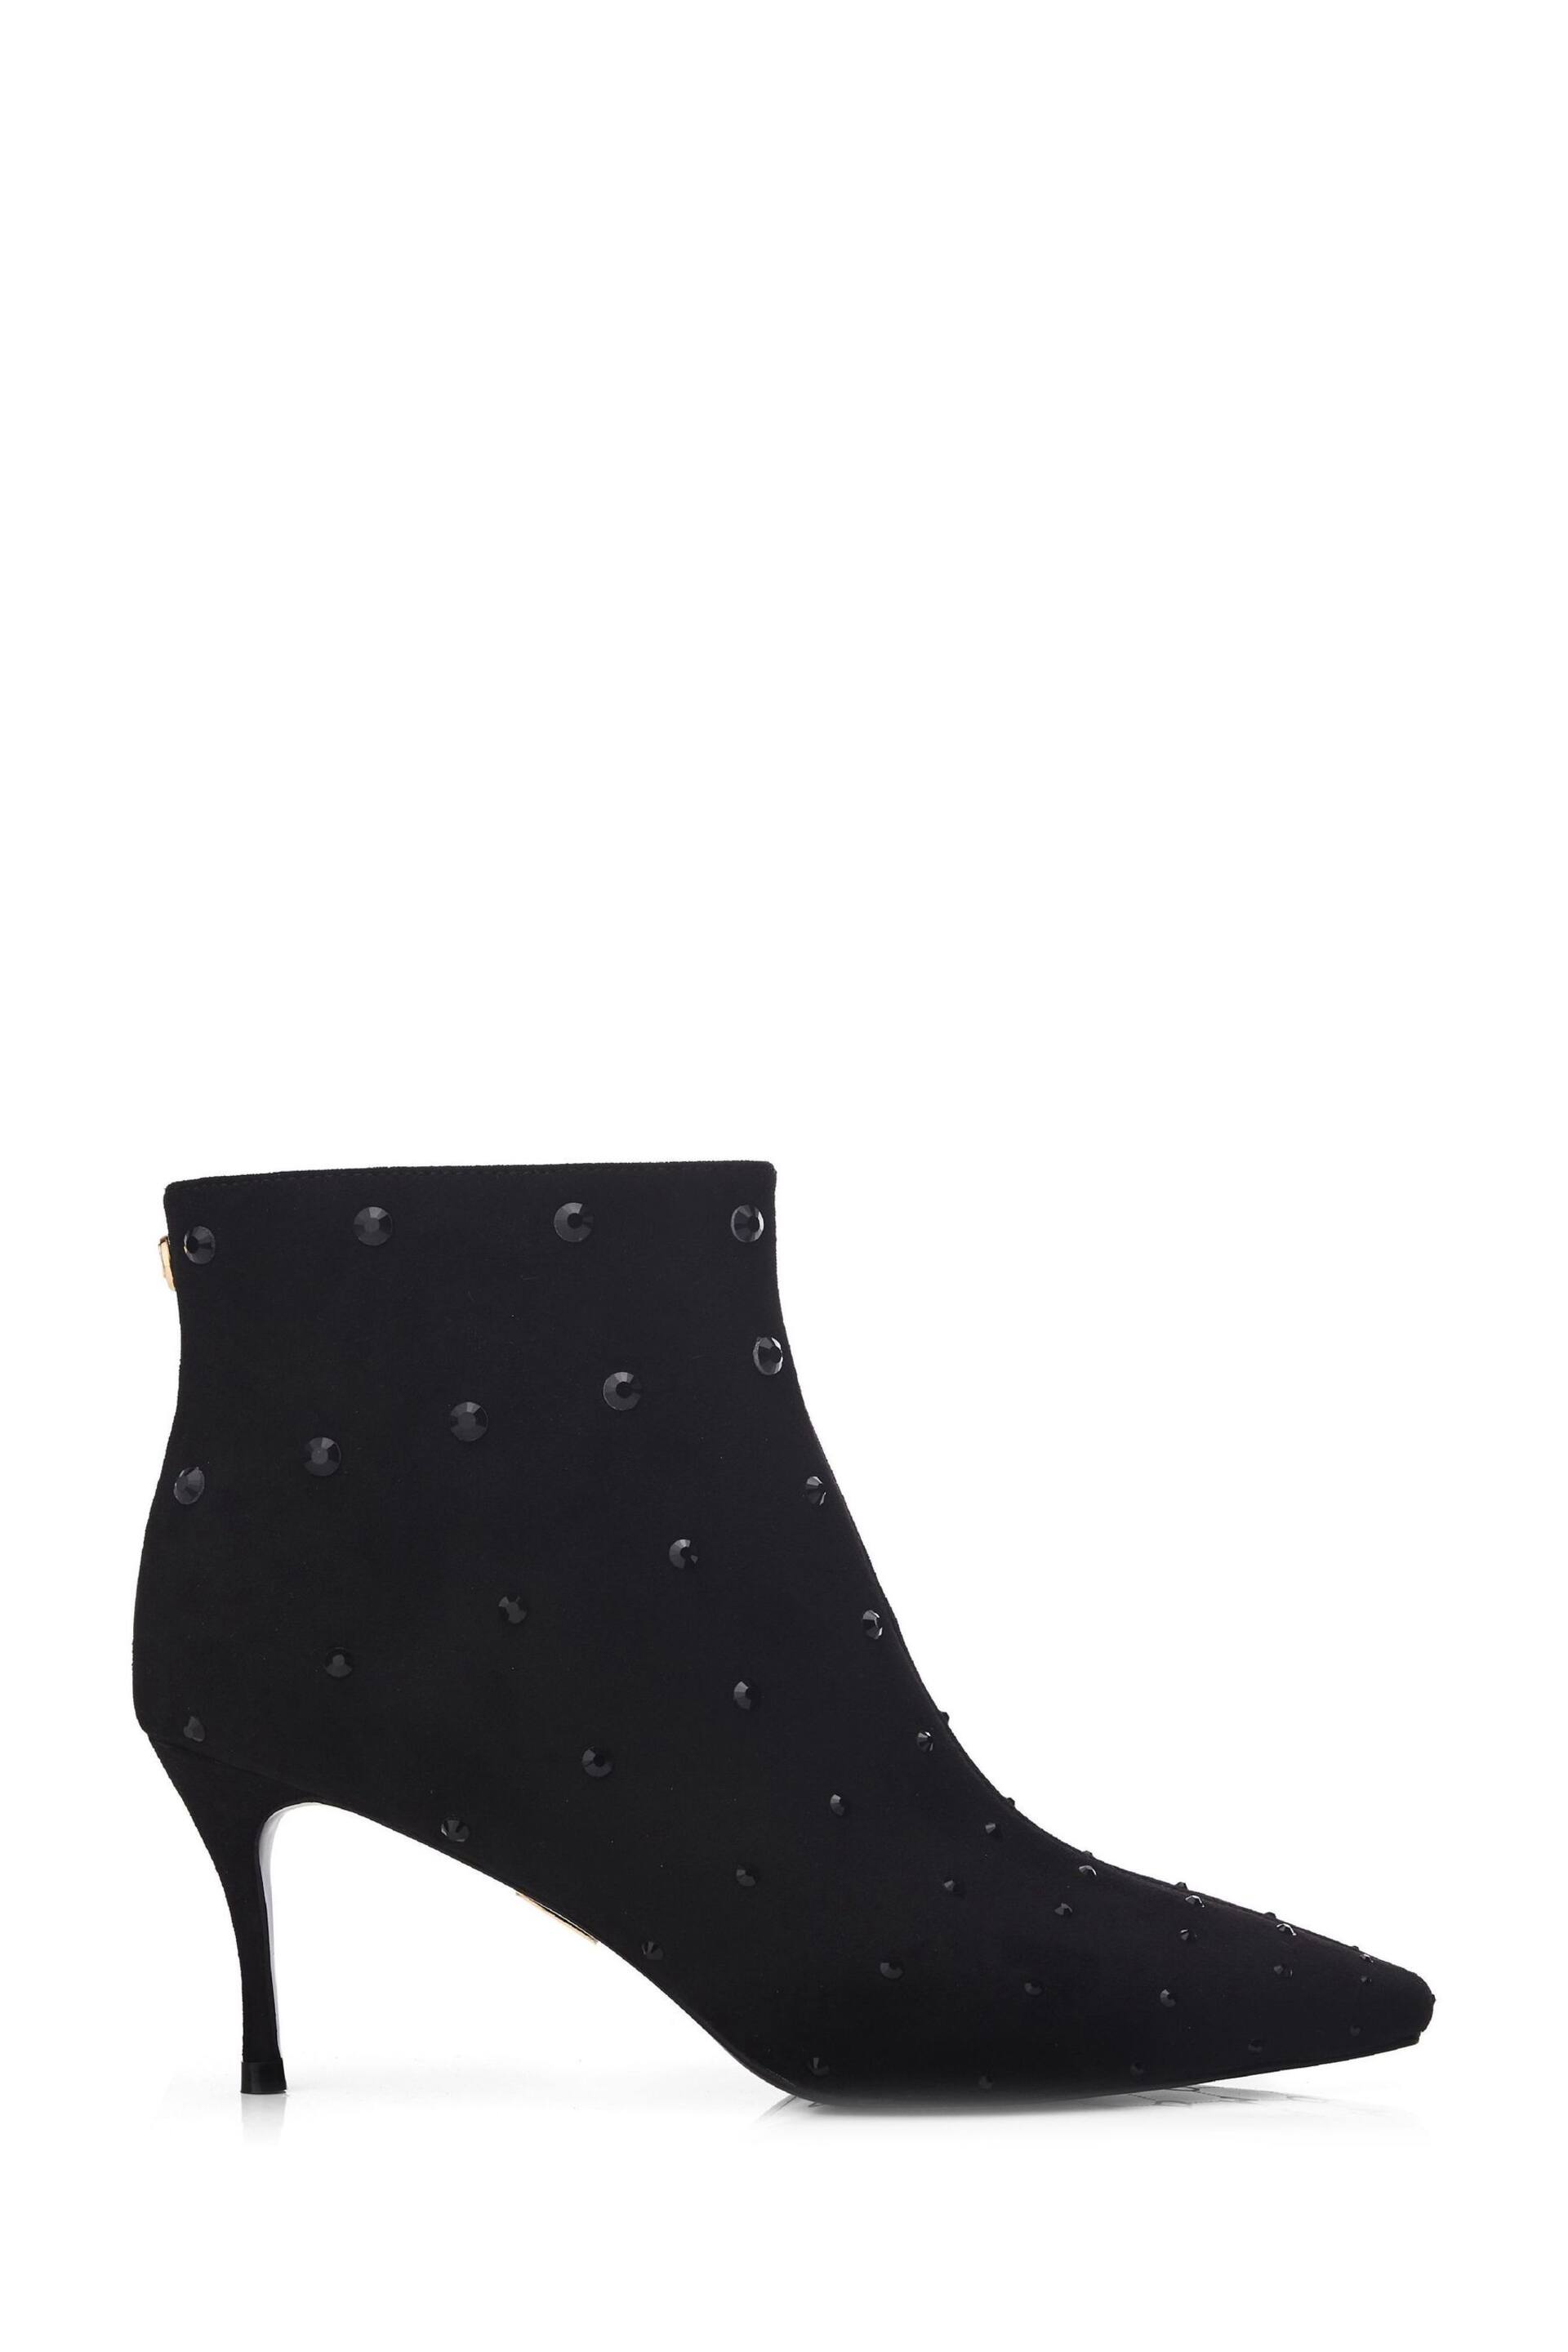 Moda in Pelle Wenoa Sq Toe Kitten Heel Crystal Stone Ankle Black Boots - Image 2 of 5